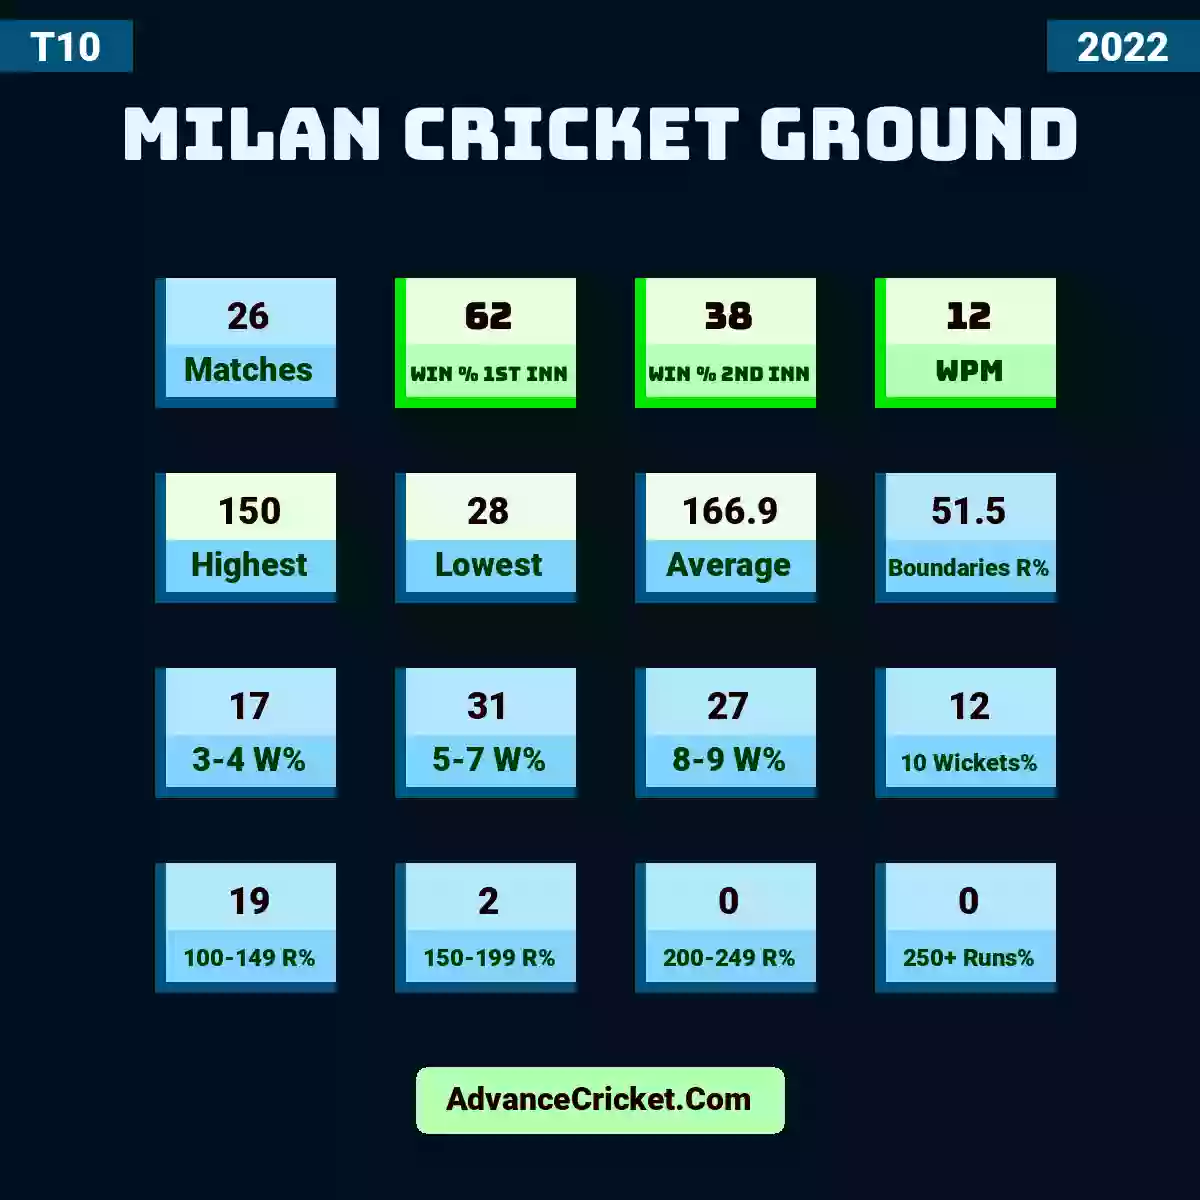 Image showing Milan Cricket Ground with Matches: 26, Win % 1st Inn: 62, Win % 2nd Inn: 38, WPM: 12, Highest: 150, Lowest: 28, Average: 166.9, Boundaries R%: 51.5, 3-4 W%: 17, 5-7 W%: 31, 8-9 W%: 27, 10 Wickets%: 12, 100-149 R%: 19, 150-199 R%: 2, 200-249 R%: 0, 250+ Runs%: 0.